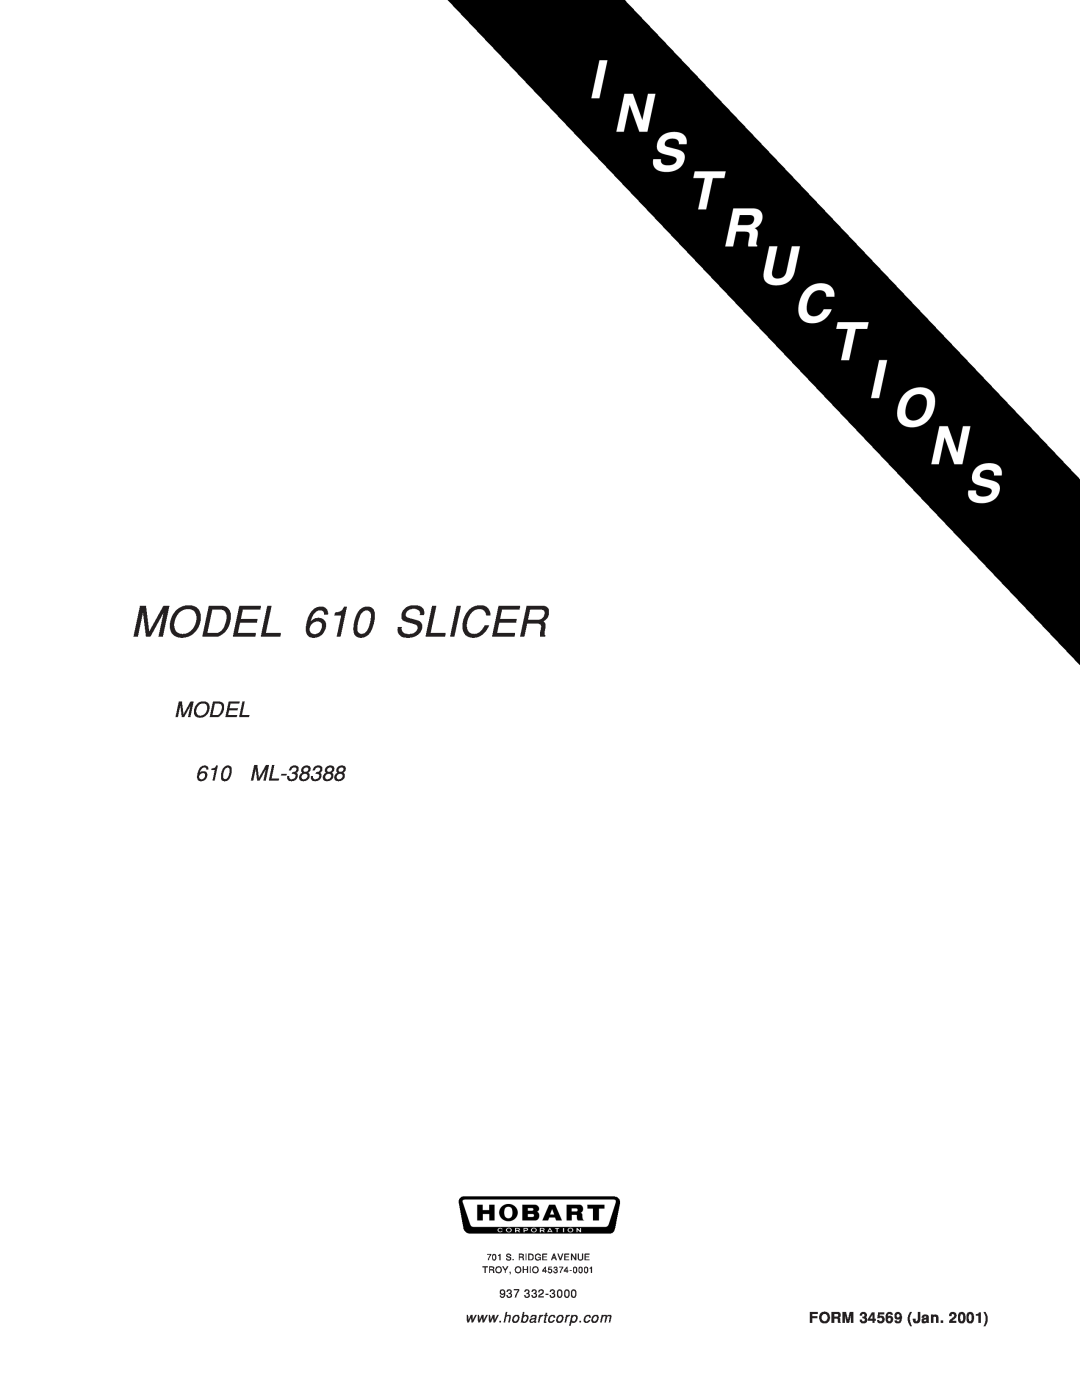 Hobart manual MODEL 610 SLICER, MODEL 610 ML-38388, FORM 34569 Jan, 701 S. RIDGE AVENUE TROY, OHIO 